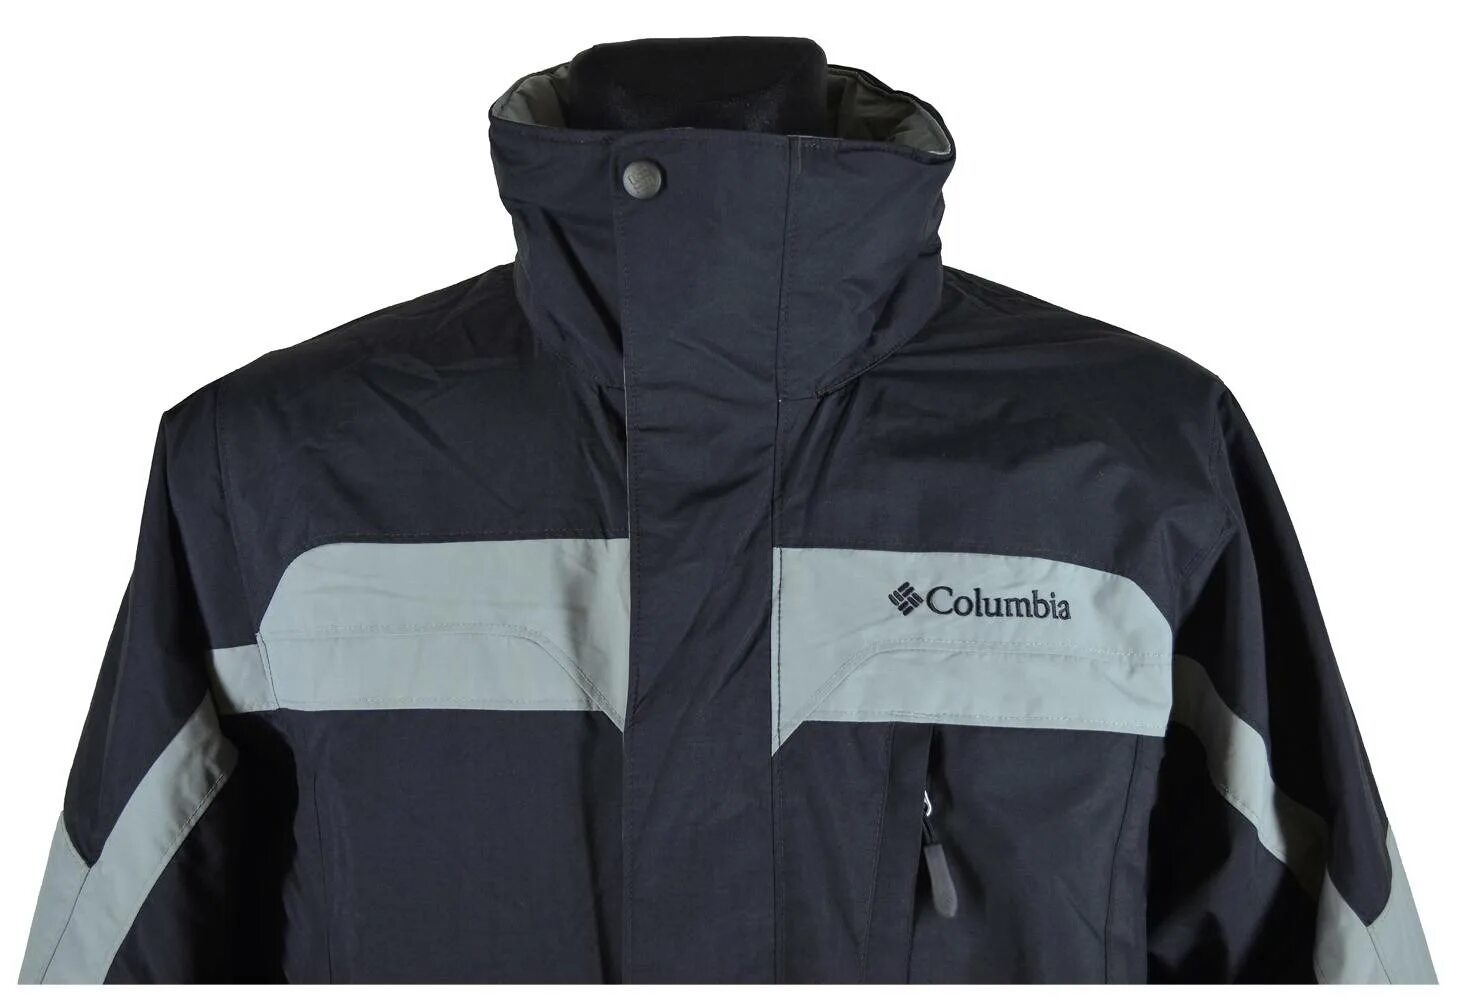 Коламбия спб. Куртка мужская Columbia sm4261012. Columbia Omni Shield куртка мужская. Коламбия Омни шилд куртка. Куртка Columbia Northway.